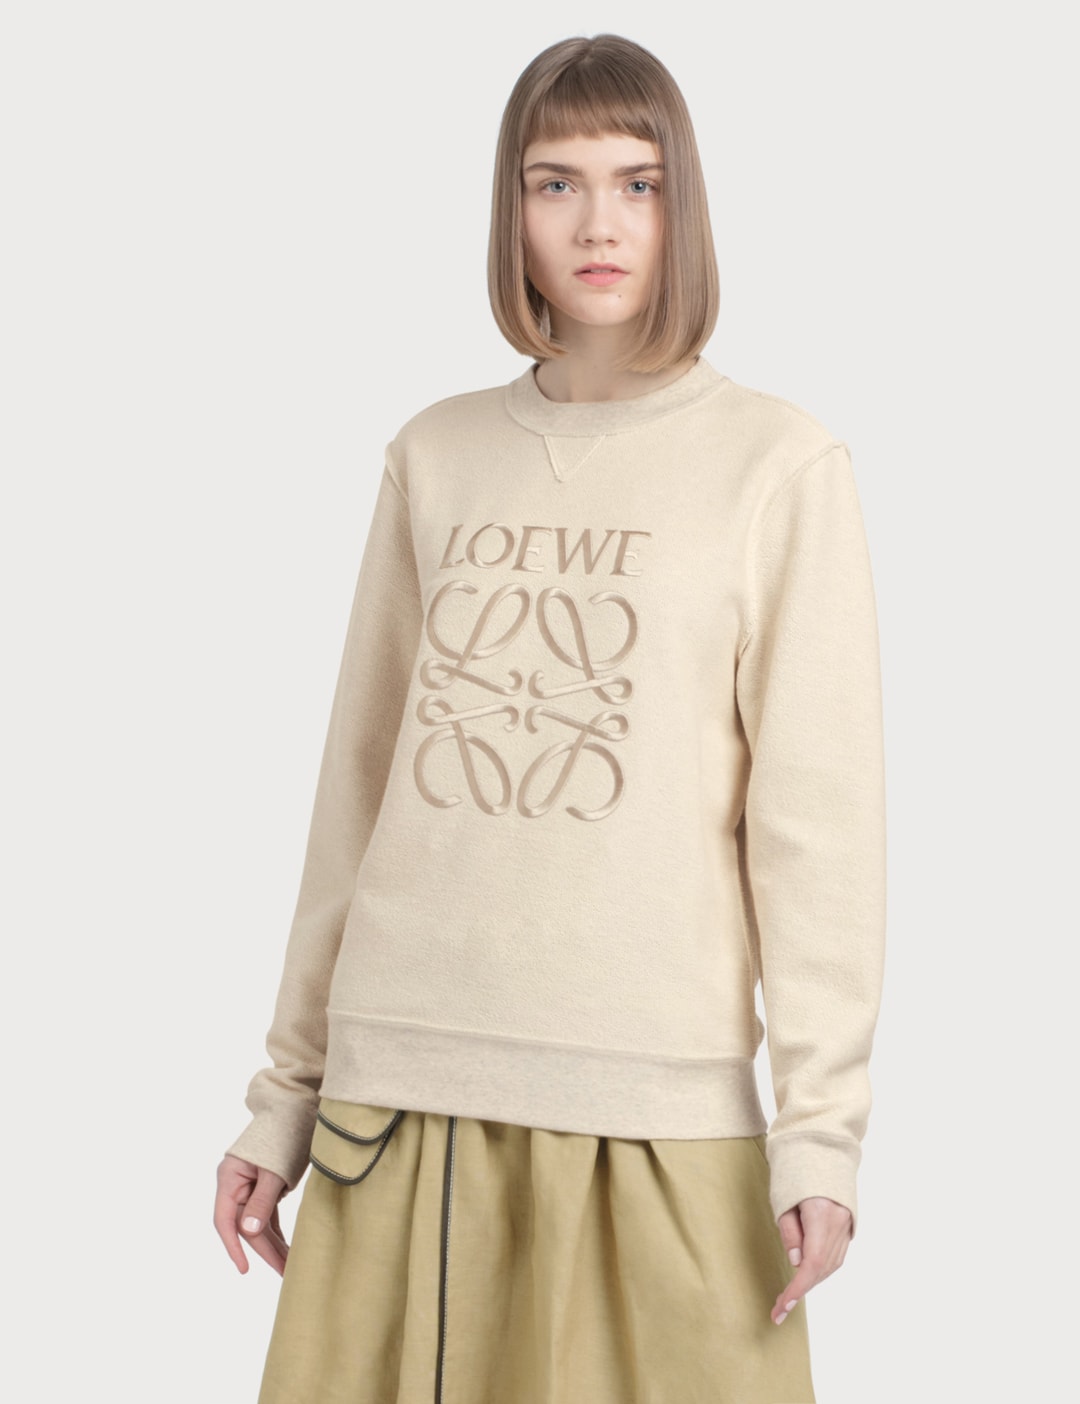 Loewe - Anagram Sweatshirt | HBX - Globally Curated Fashion and ...